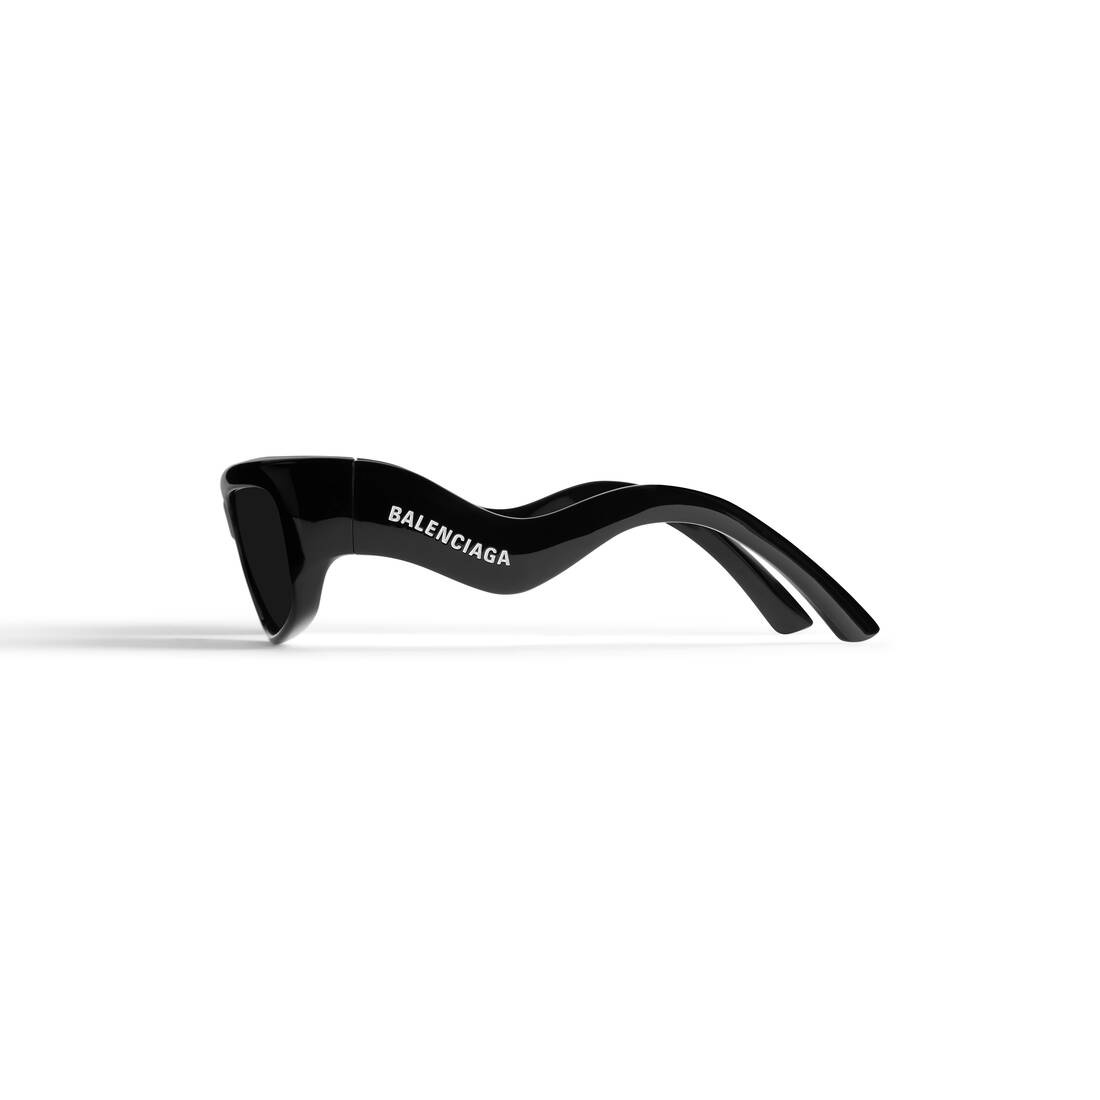 Hamptons Rectangle Sunglasses in Black - 4